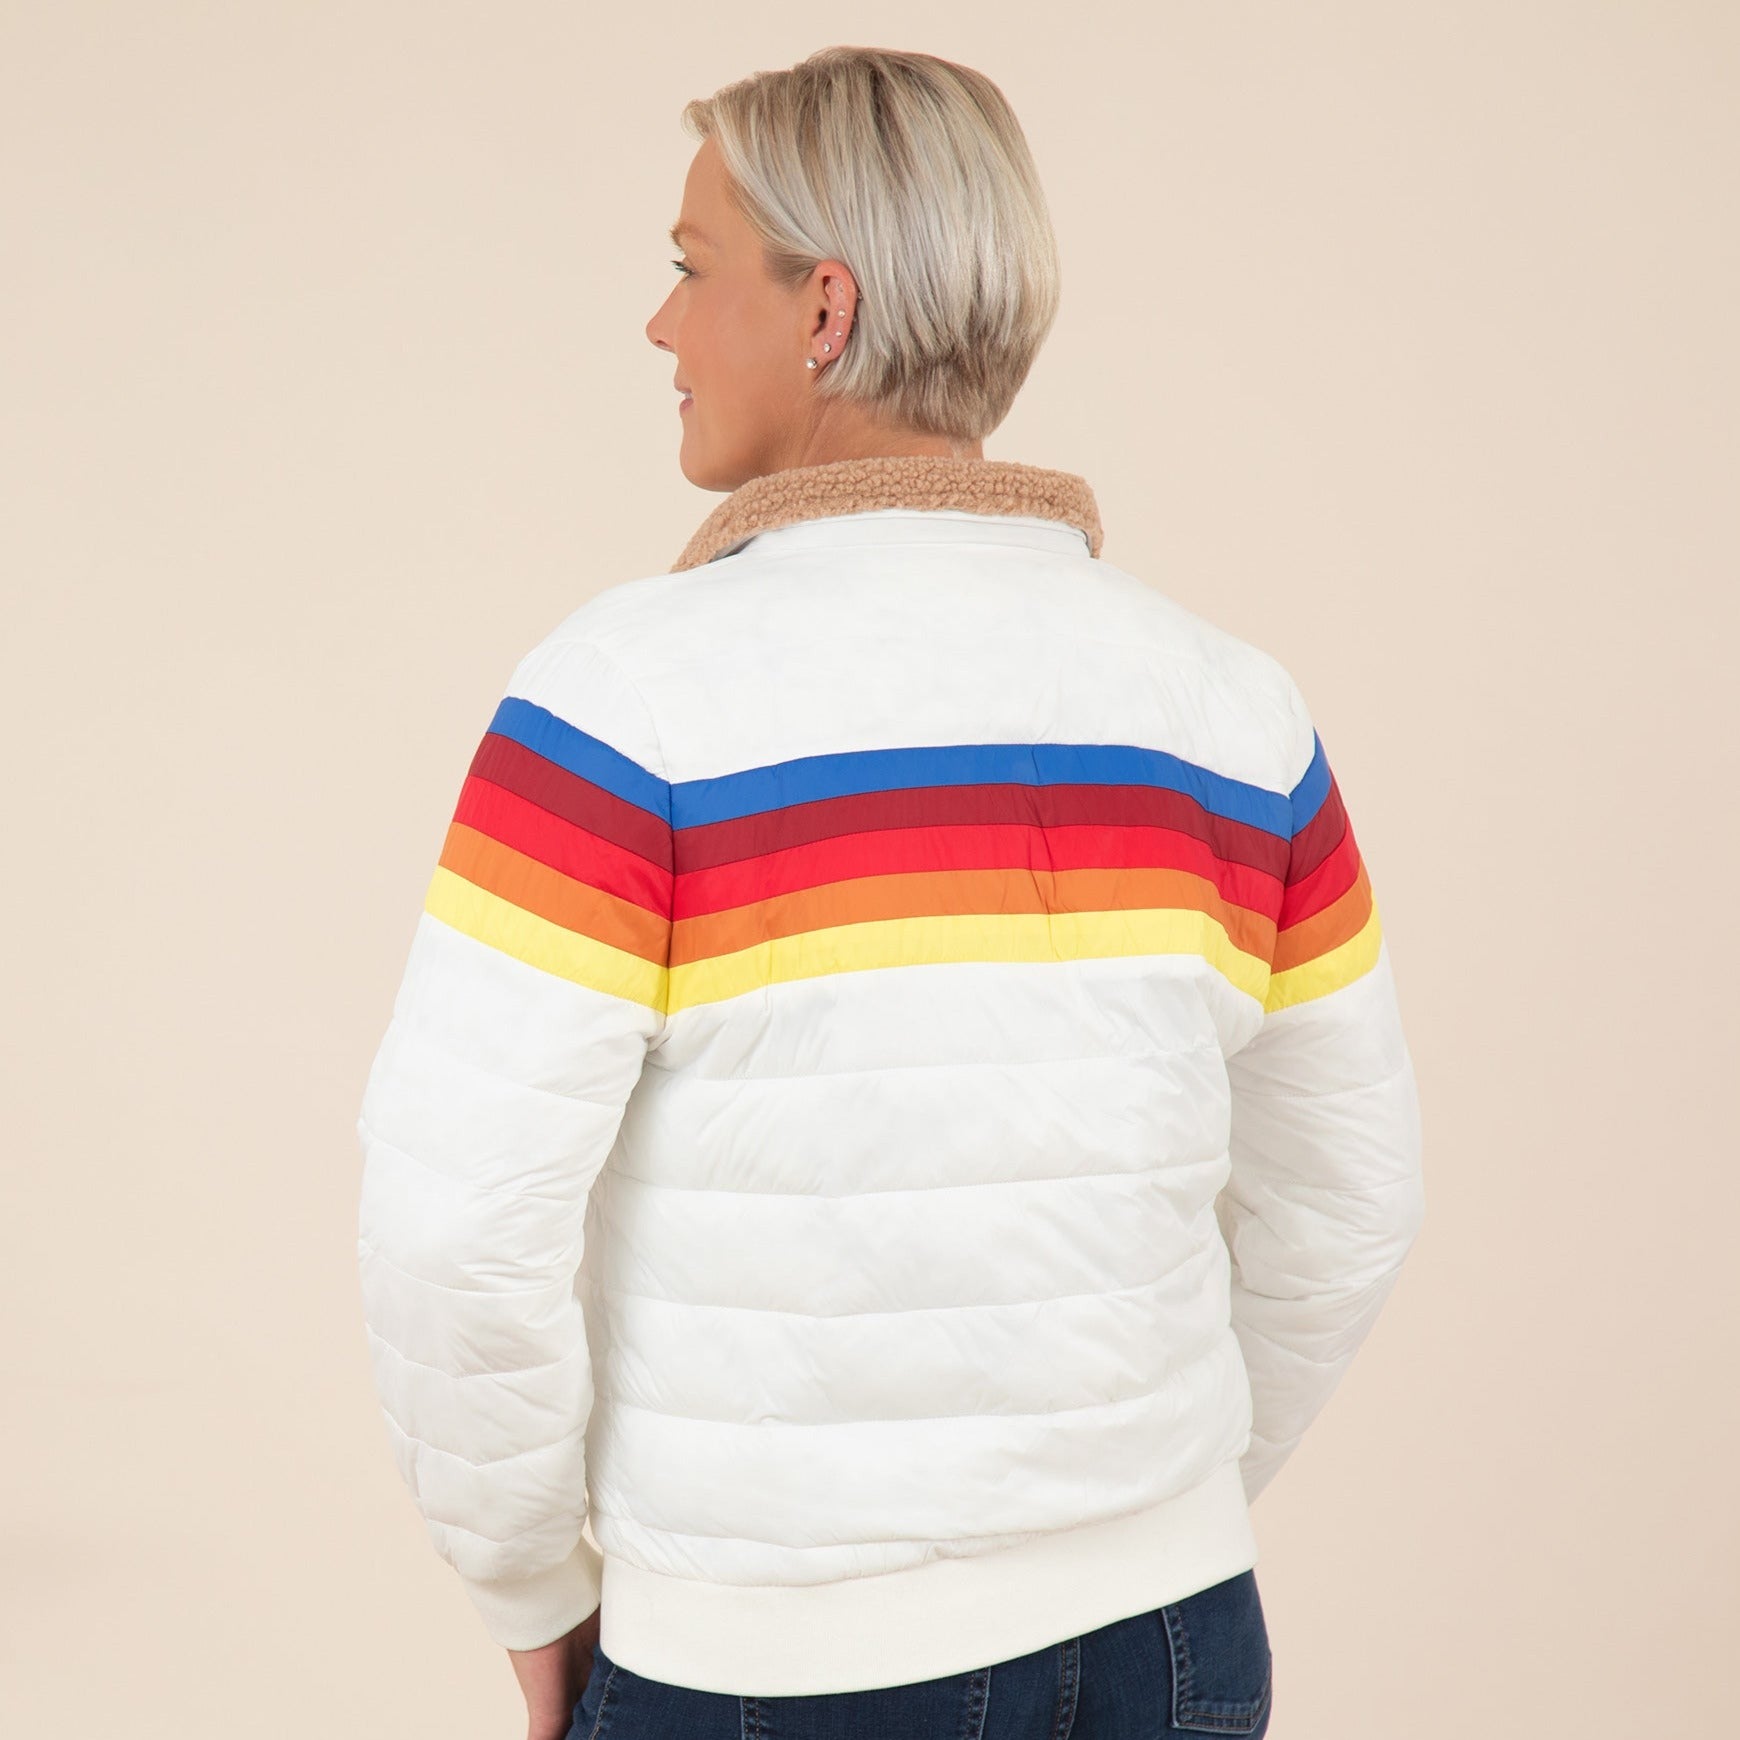 Chasing Rainbows Retro Stripe Insulated Jacket - White - S